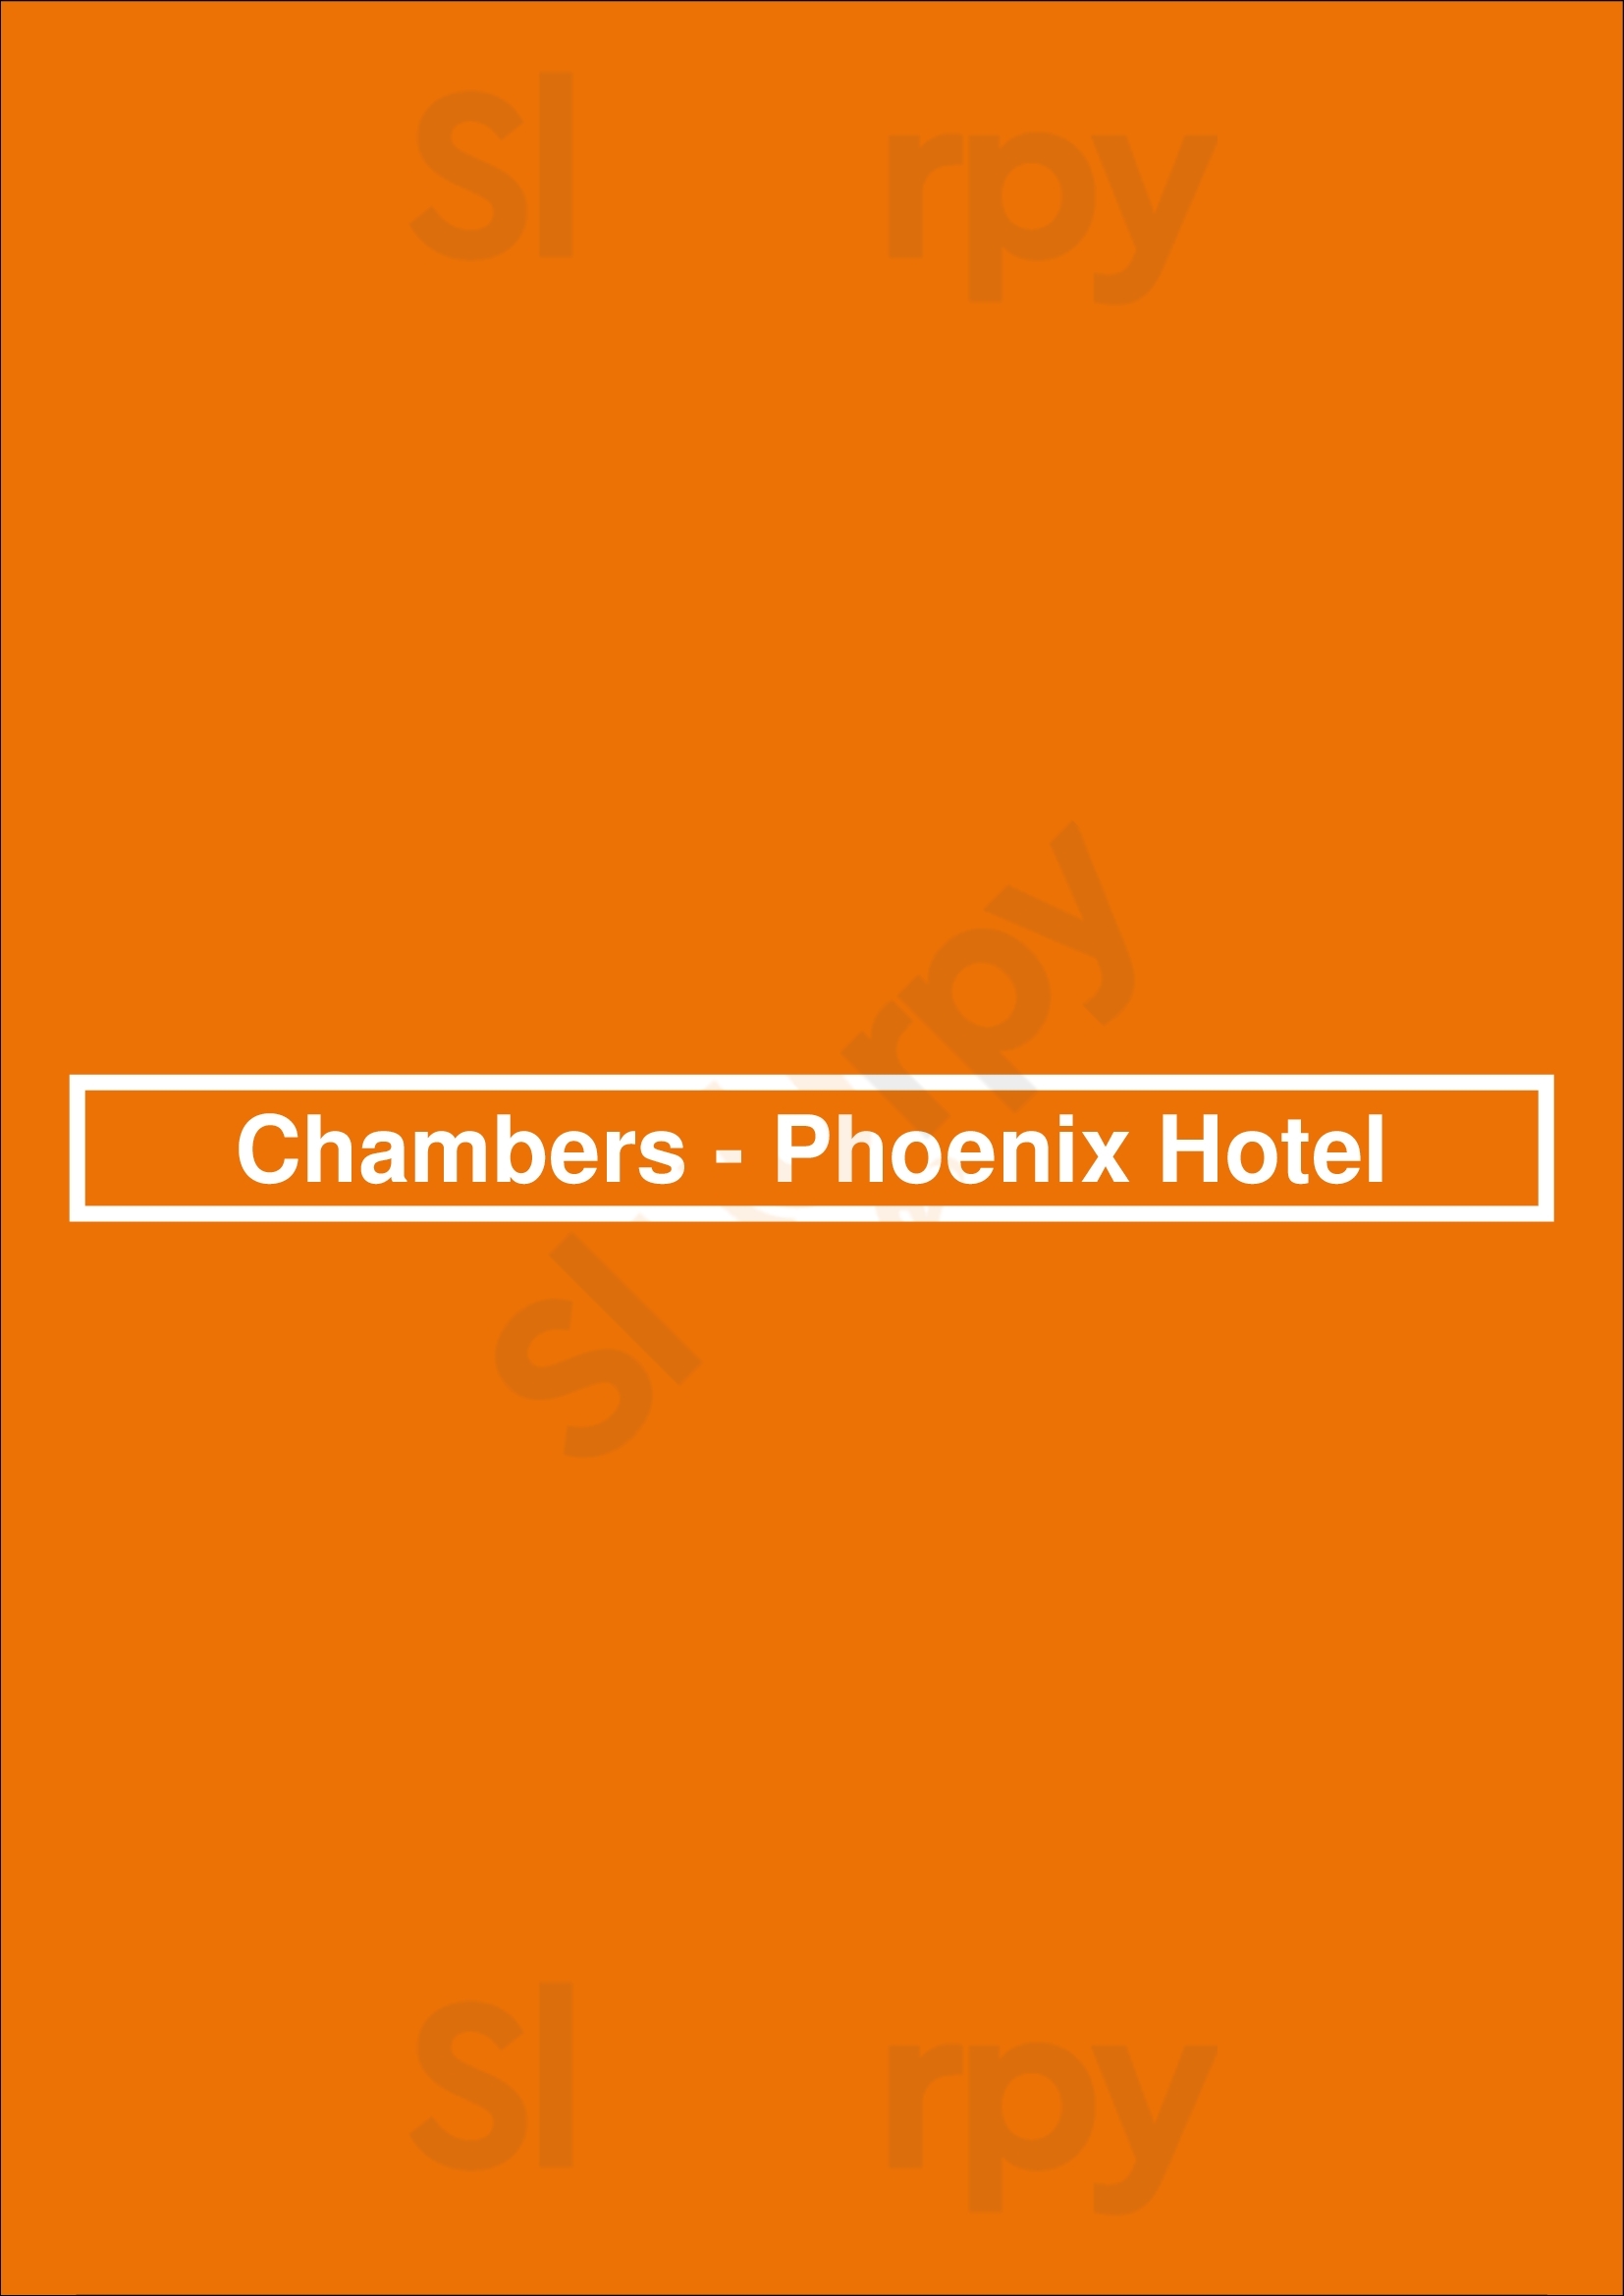 Chambers - Phoenix Hotel San Francisco Menu - 1